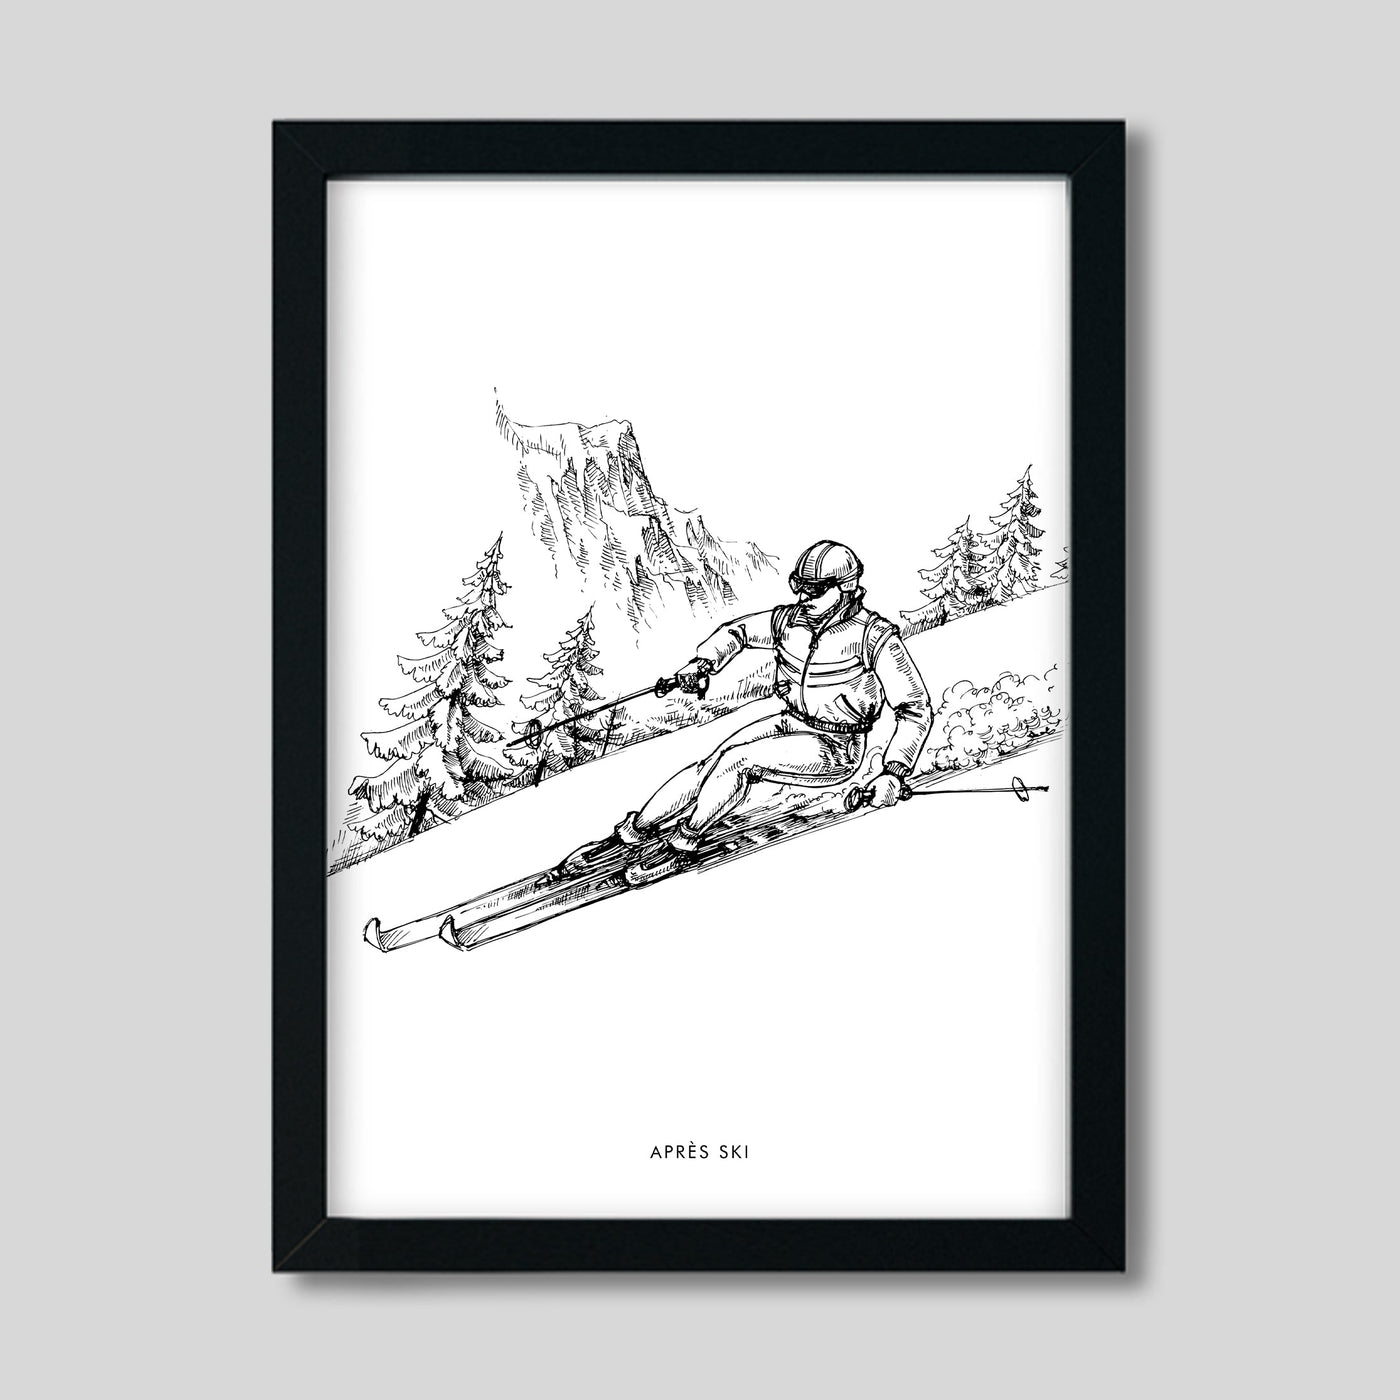 Gallery Print Black Print / 8x10 / Black Frame Après Ski Skier Print dombezalergii